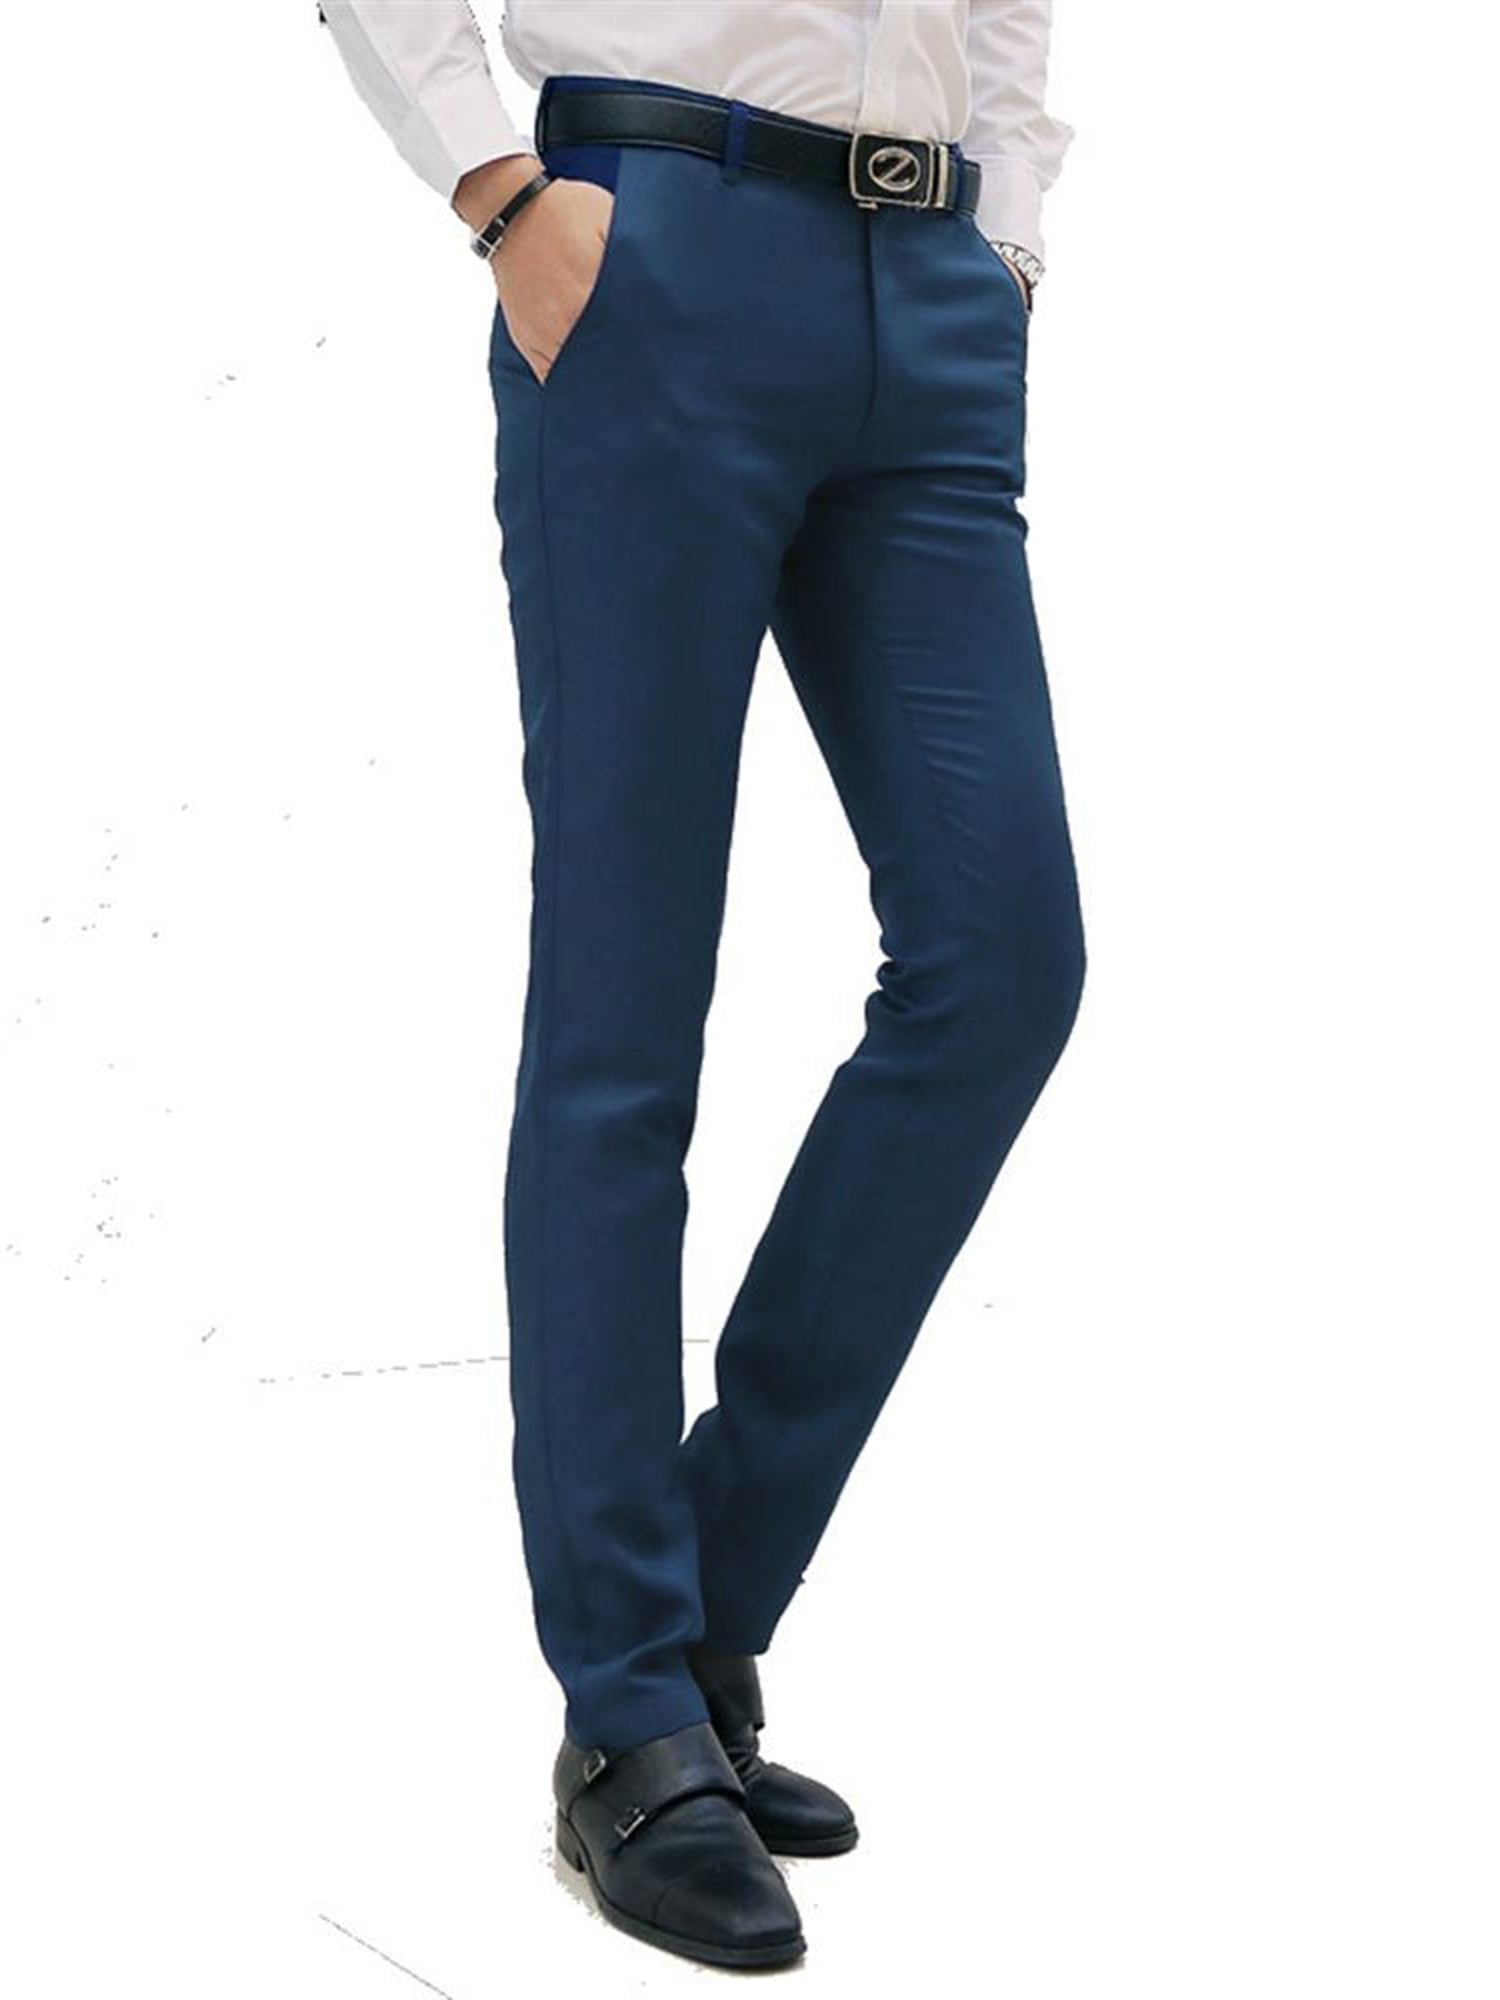 UPAIRC Mens Chinos Pants Slim Fit Skinny Smart Suit Trousers - Walmart.com